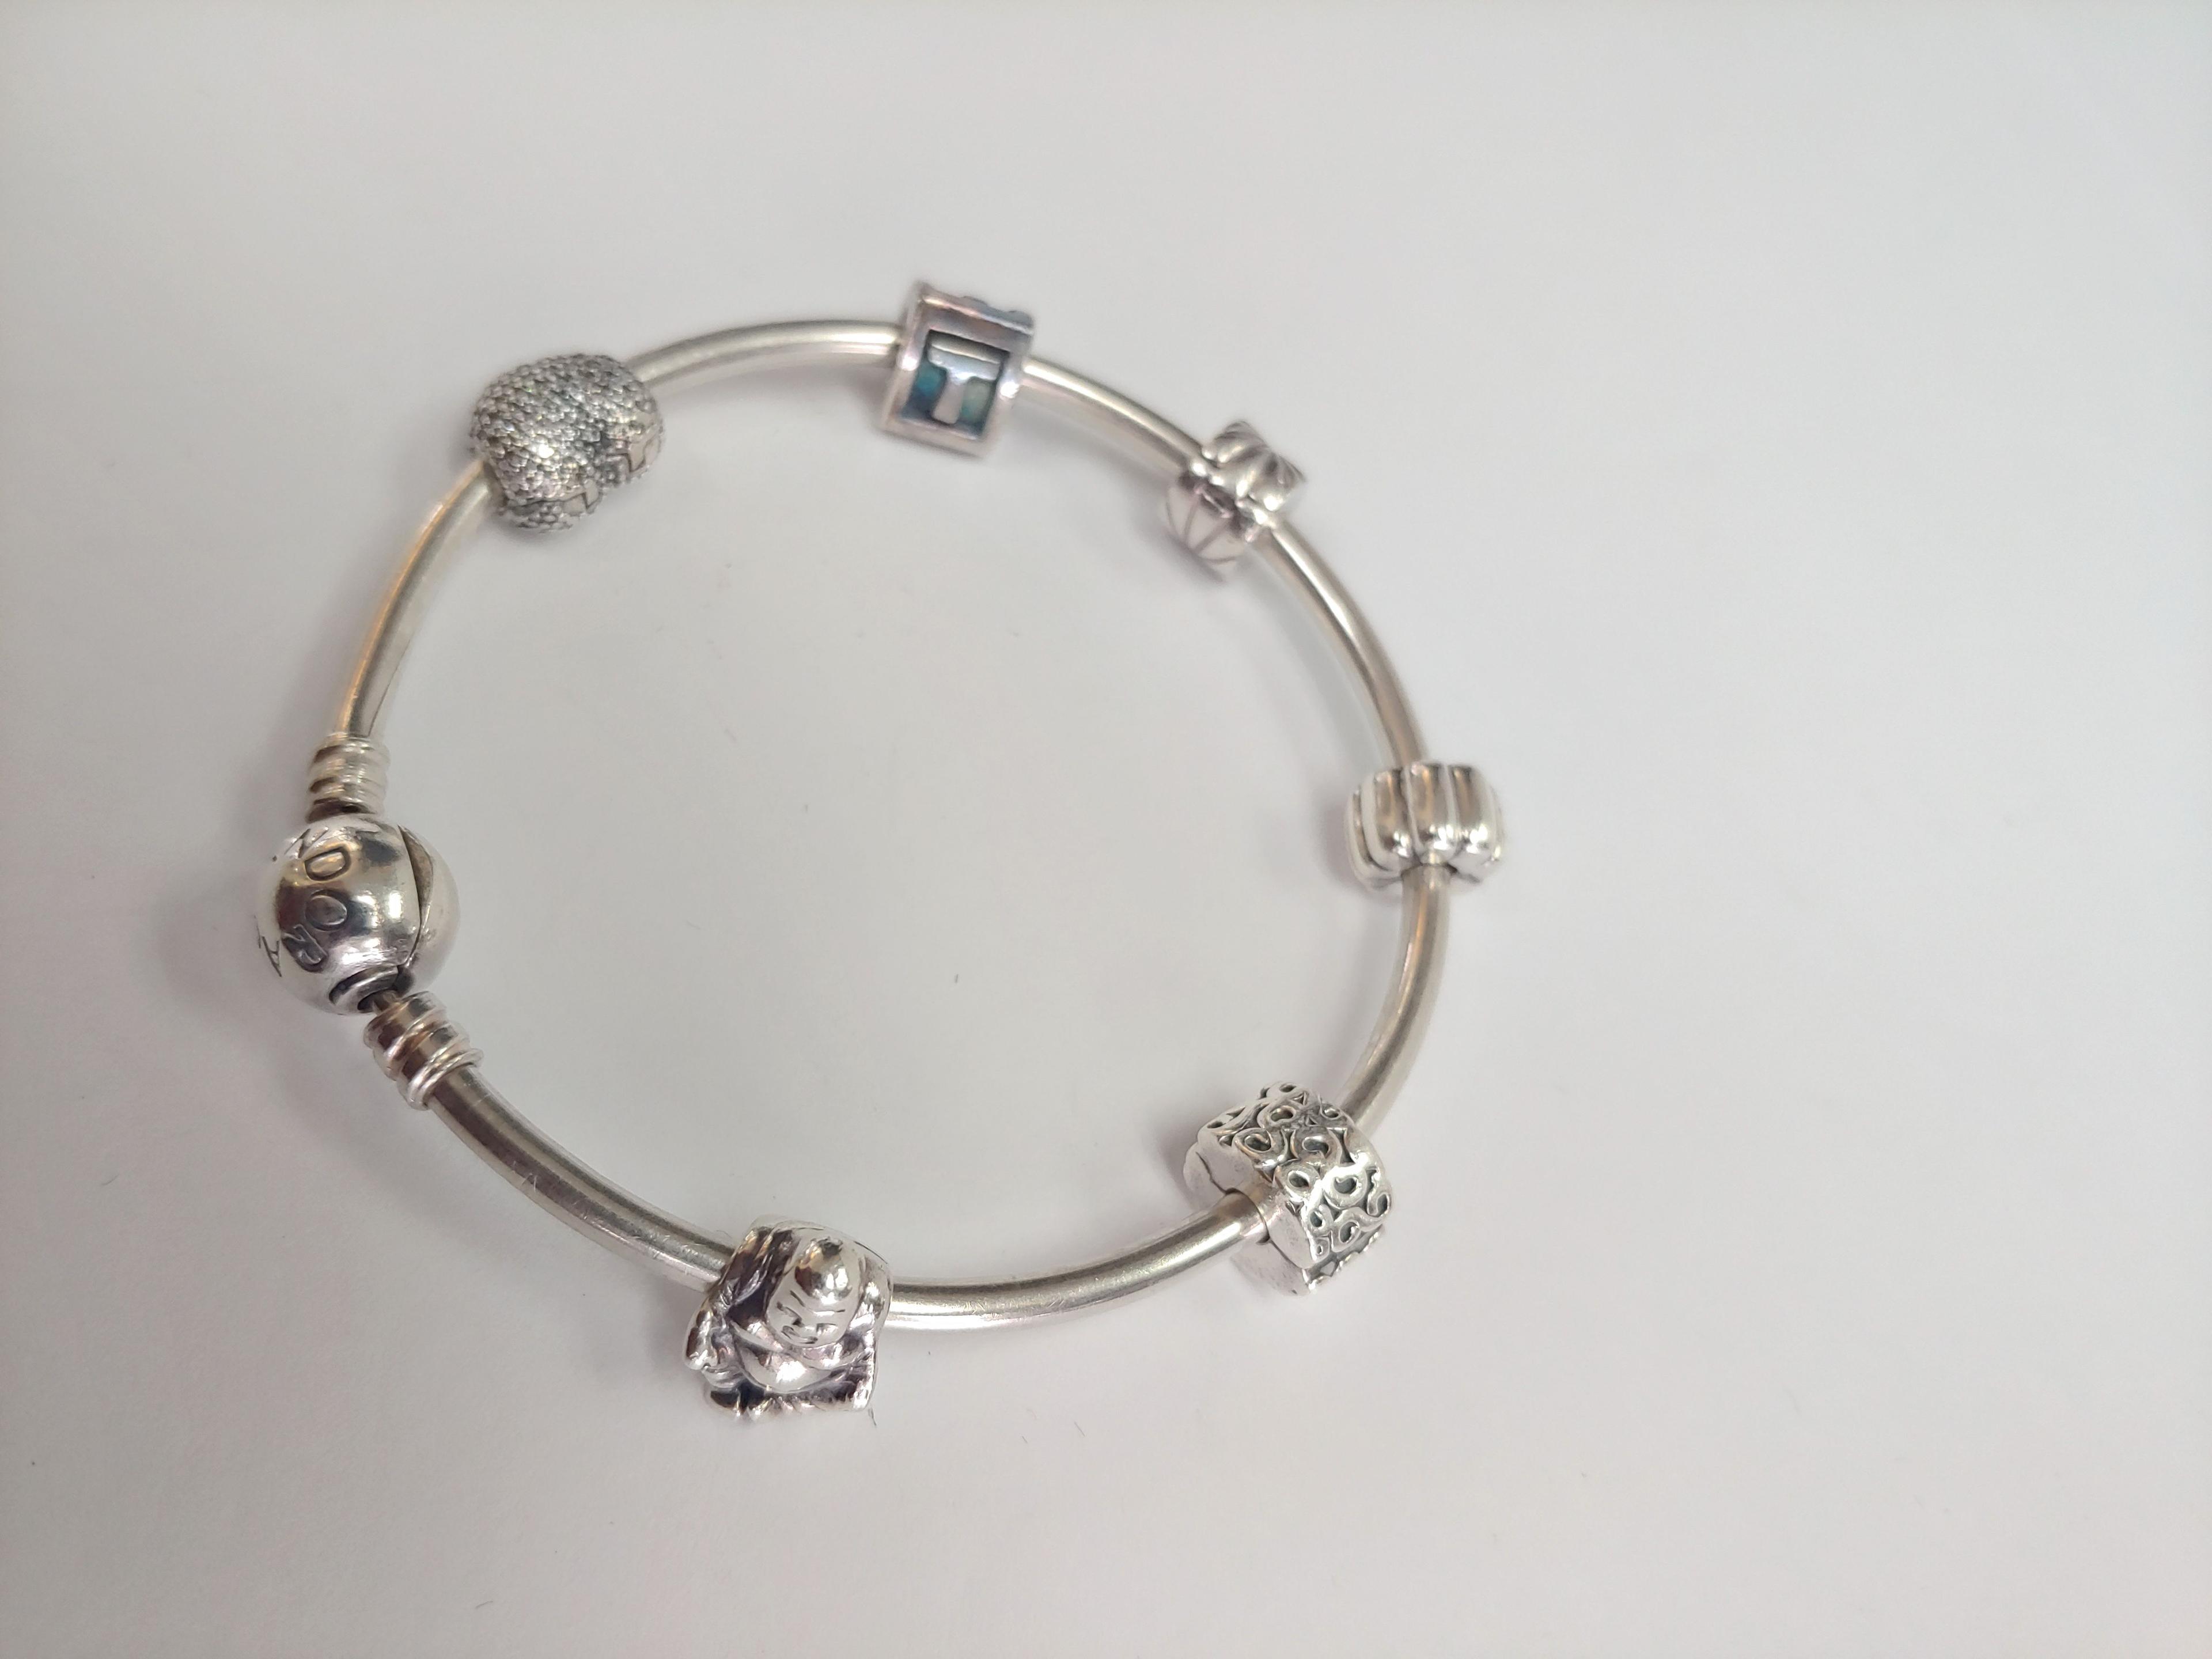 Designers Womens Pandora Bangle Bracelet with 6 Charm Charms and Box